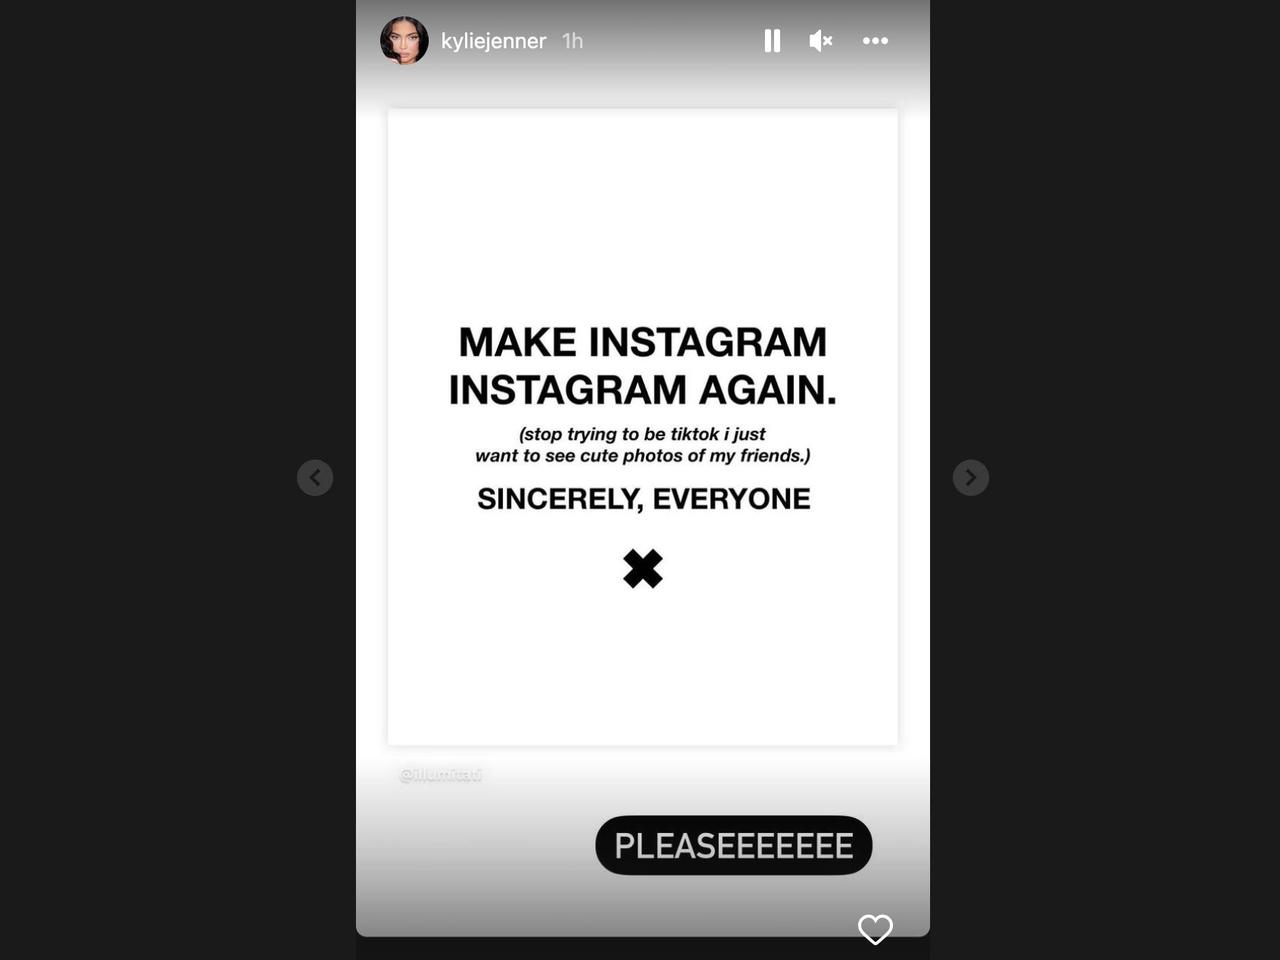 Kylie's Instagram